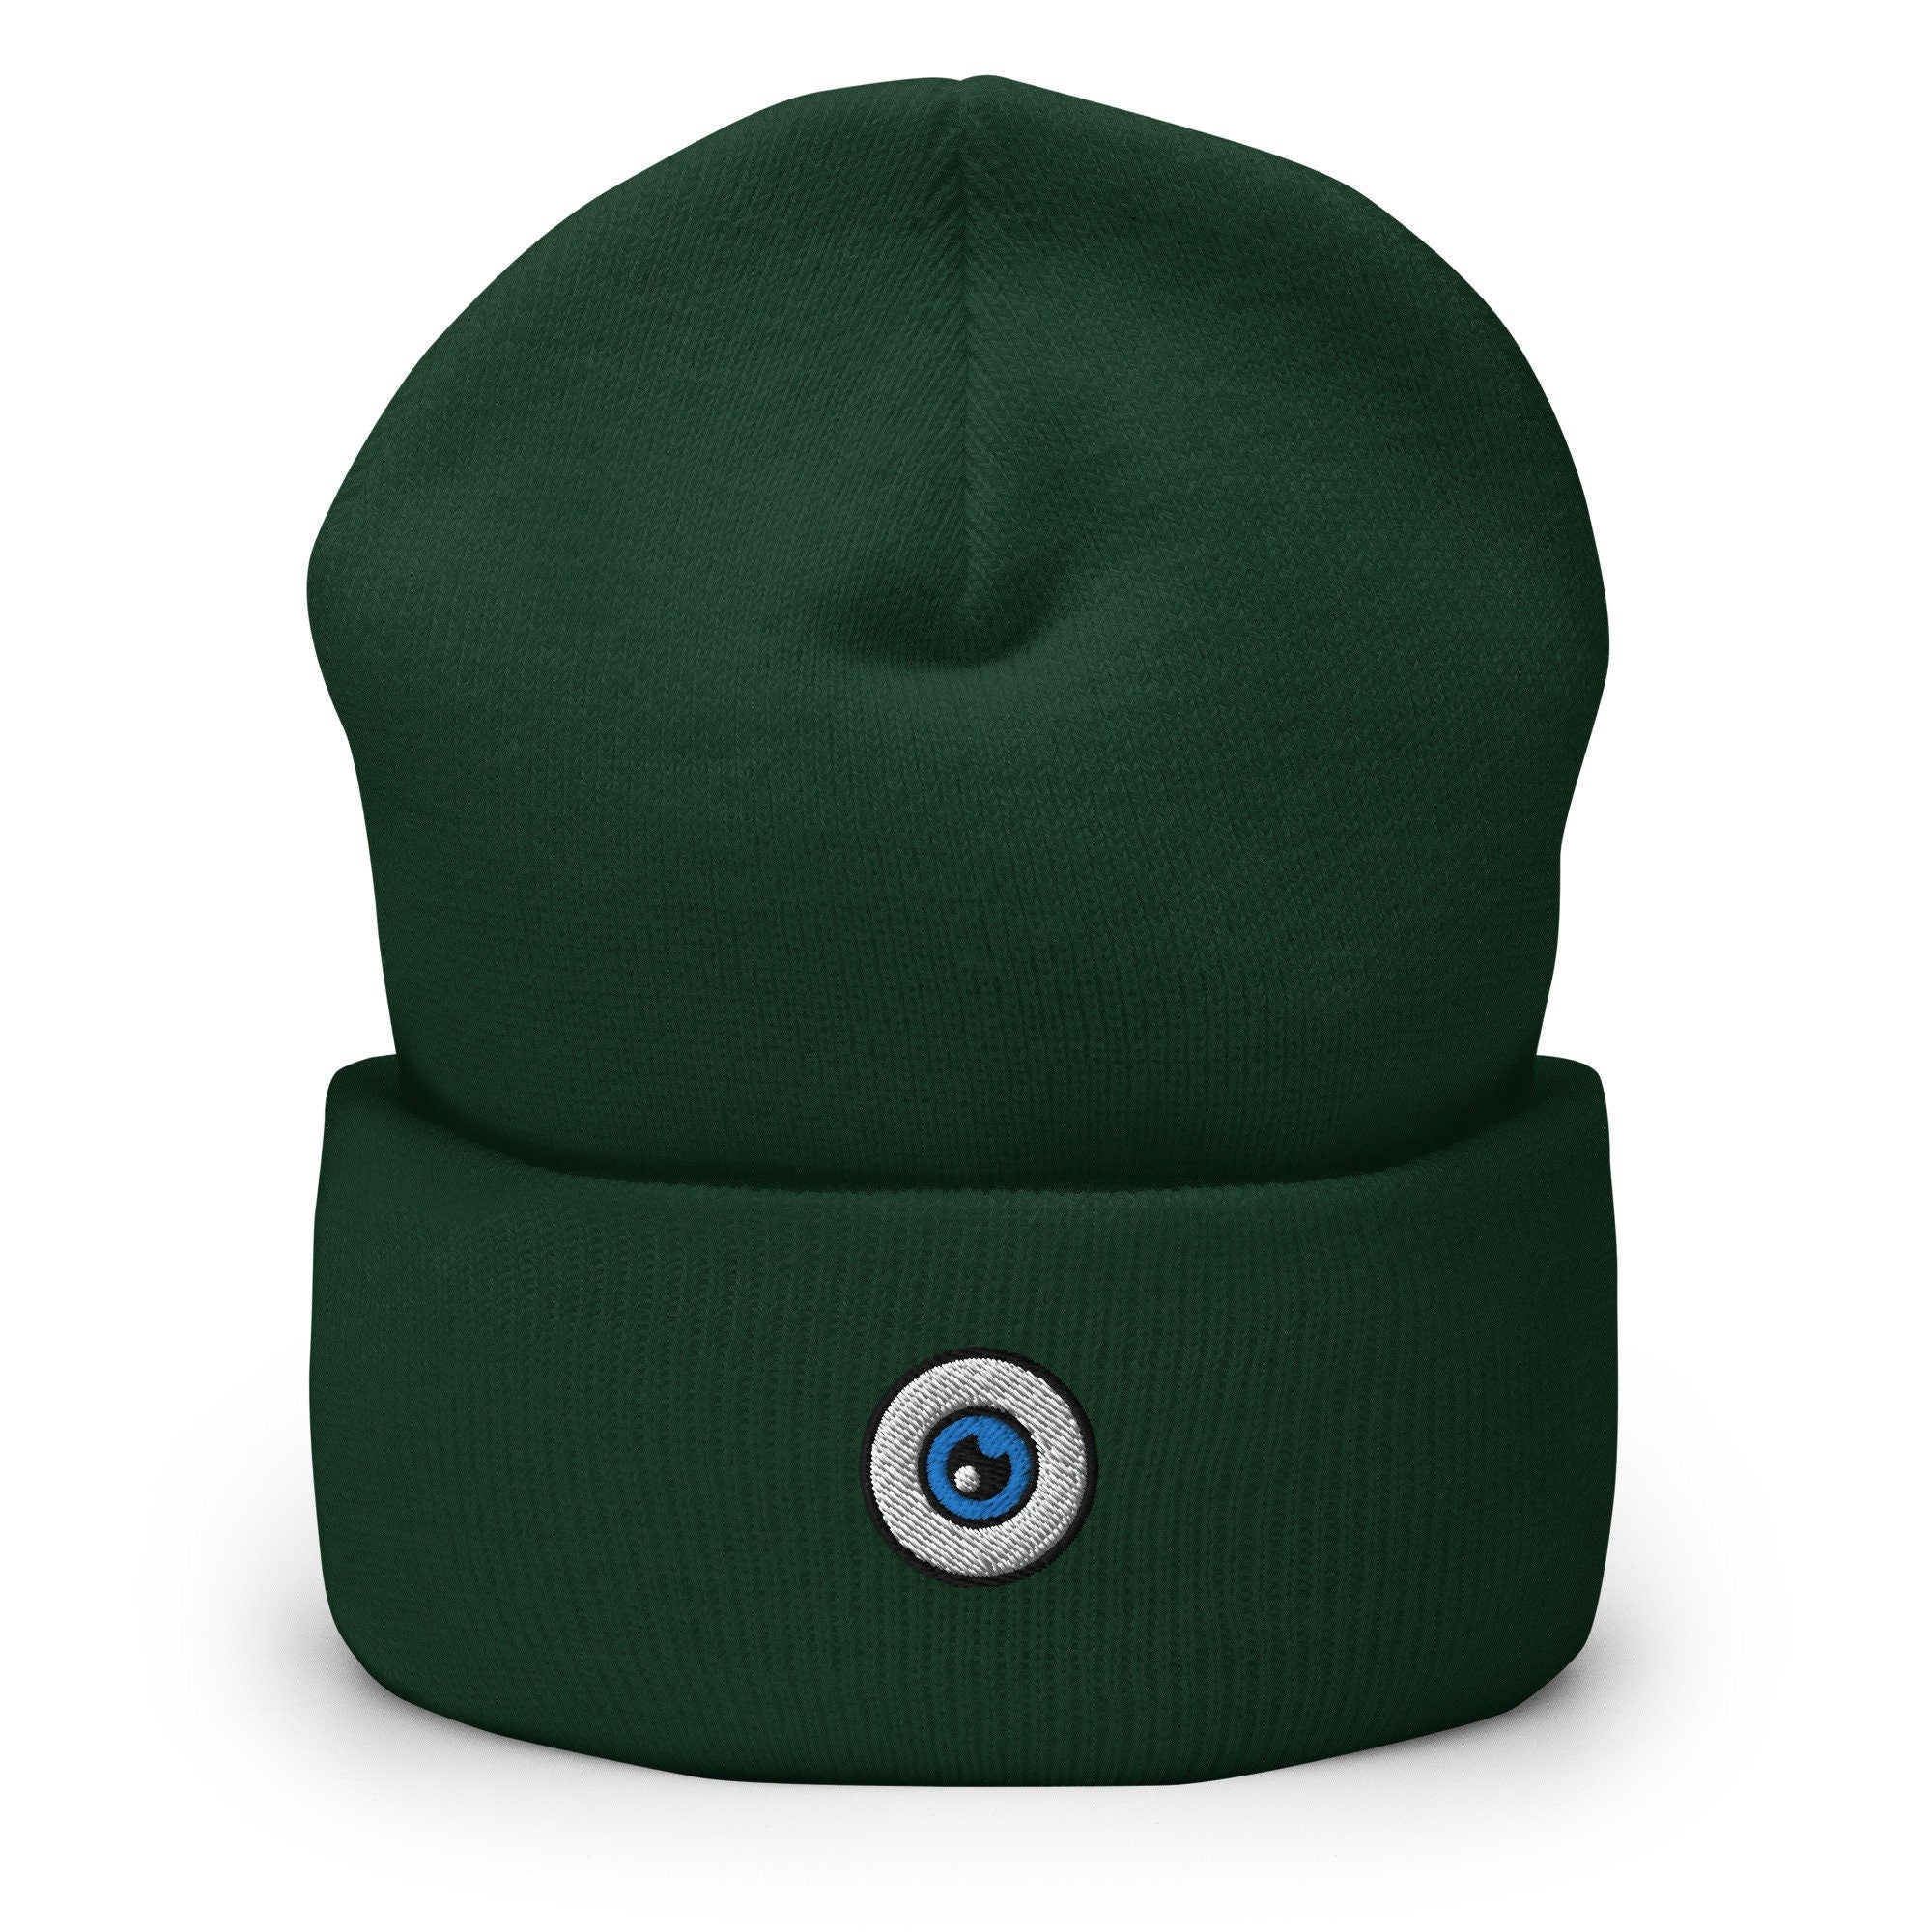 Optometrist Gift, Eyeball Embroidered Beanie, Handmade Cuffed Knit Unisex Slouchy Adult Winter Hat Cap Gift